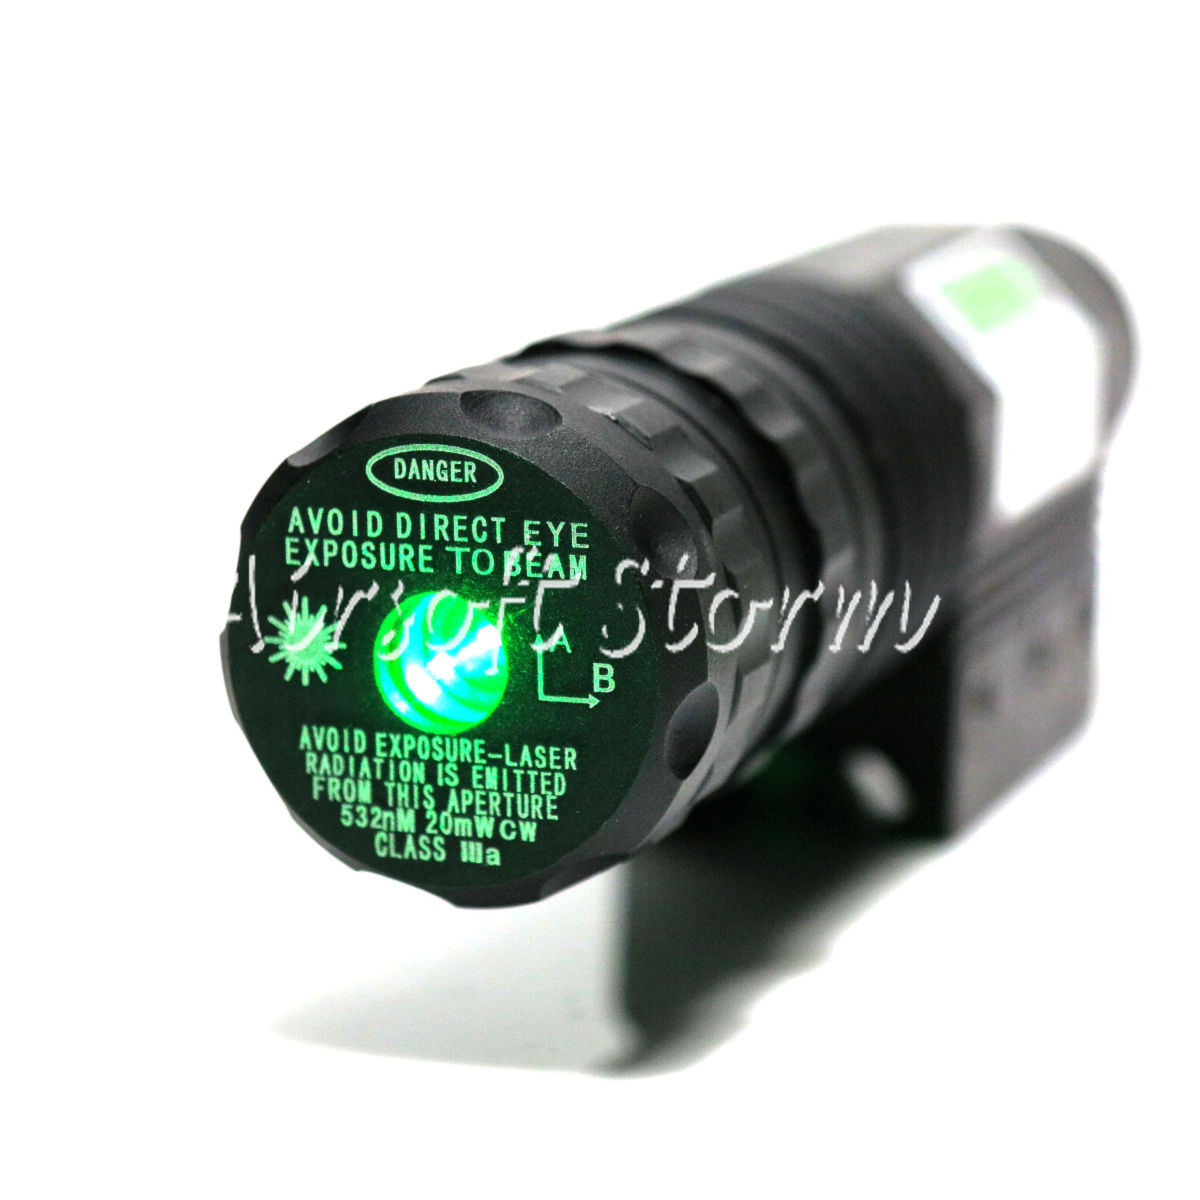 LXGD Tactical Gear High Power Visible Green Laser Sight Pointer JG-018